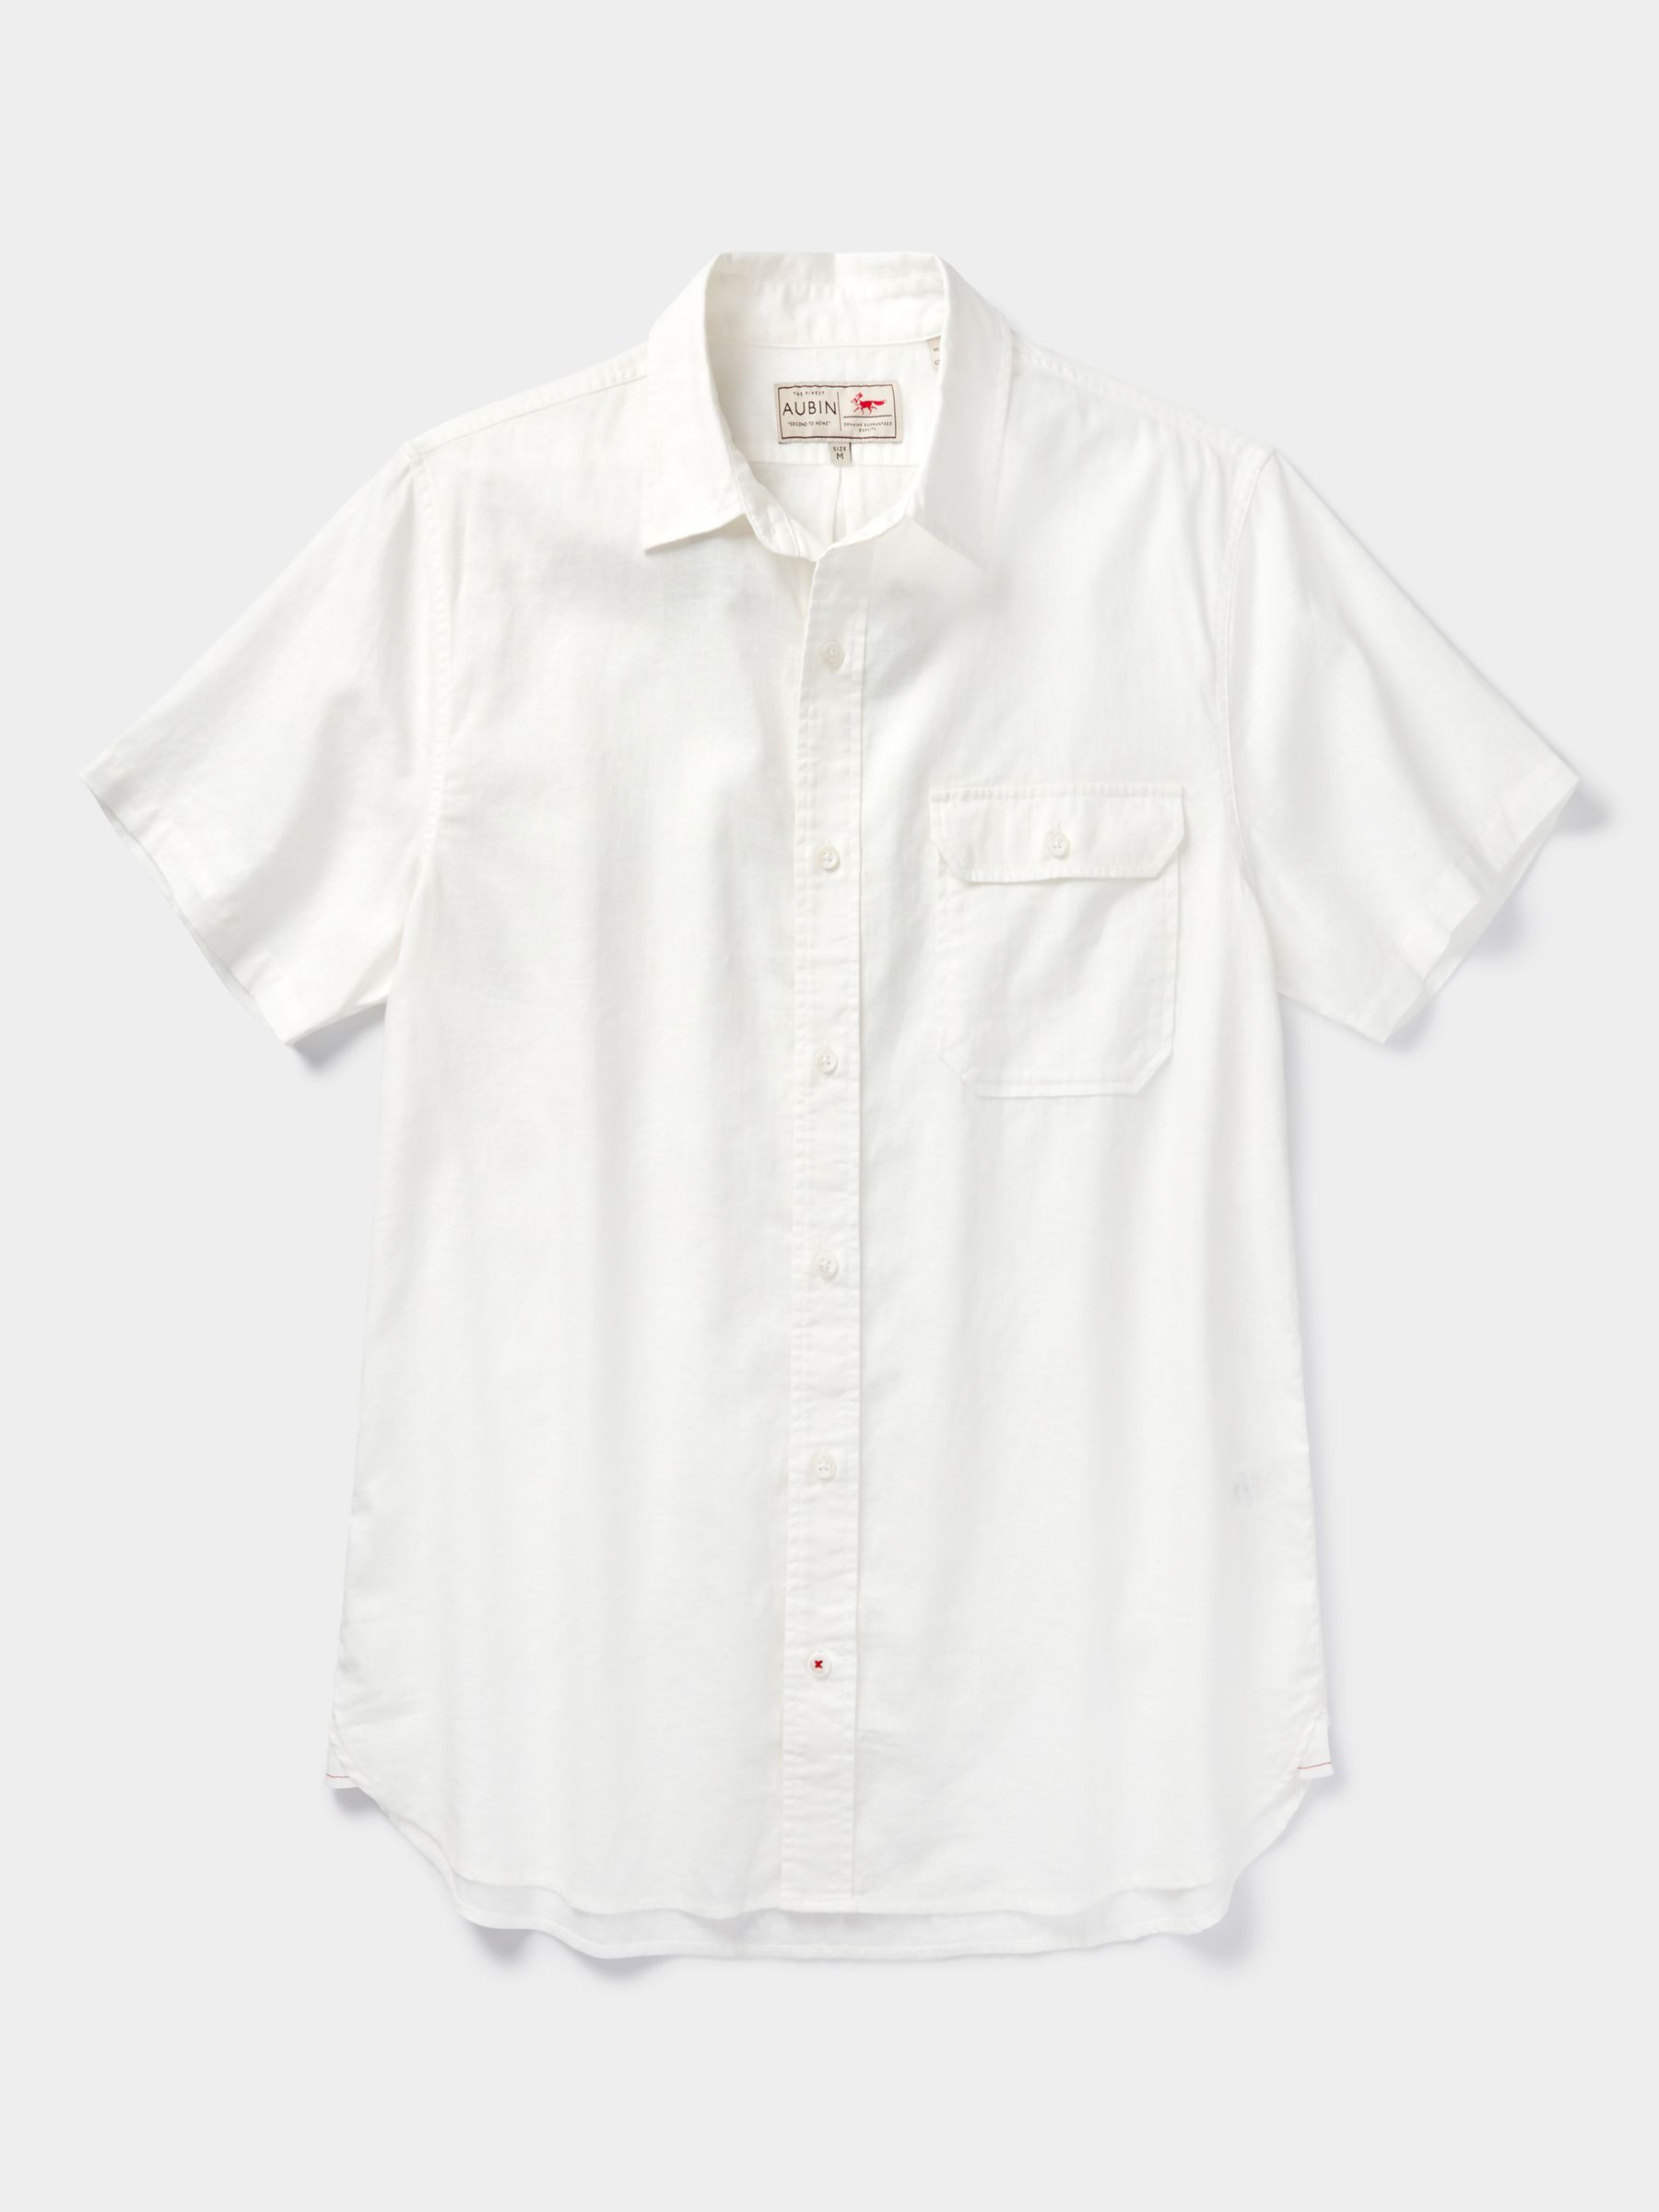 Aubin Buckden Short Sleeve Shirt, White, S